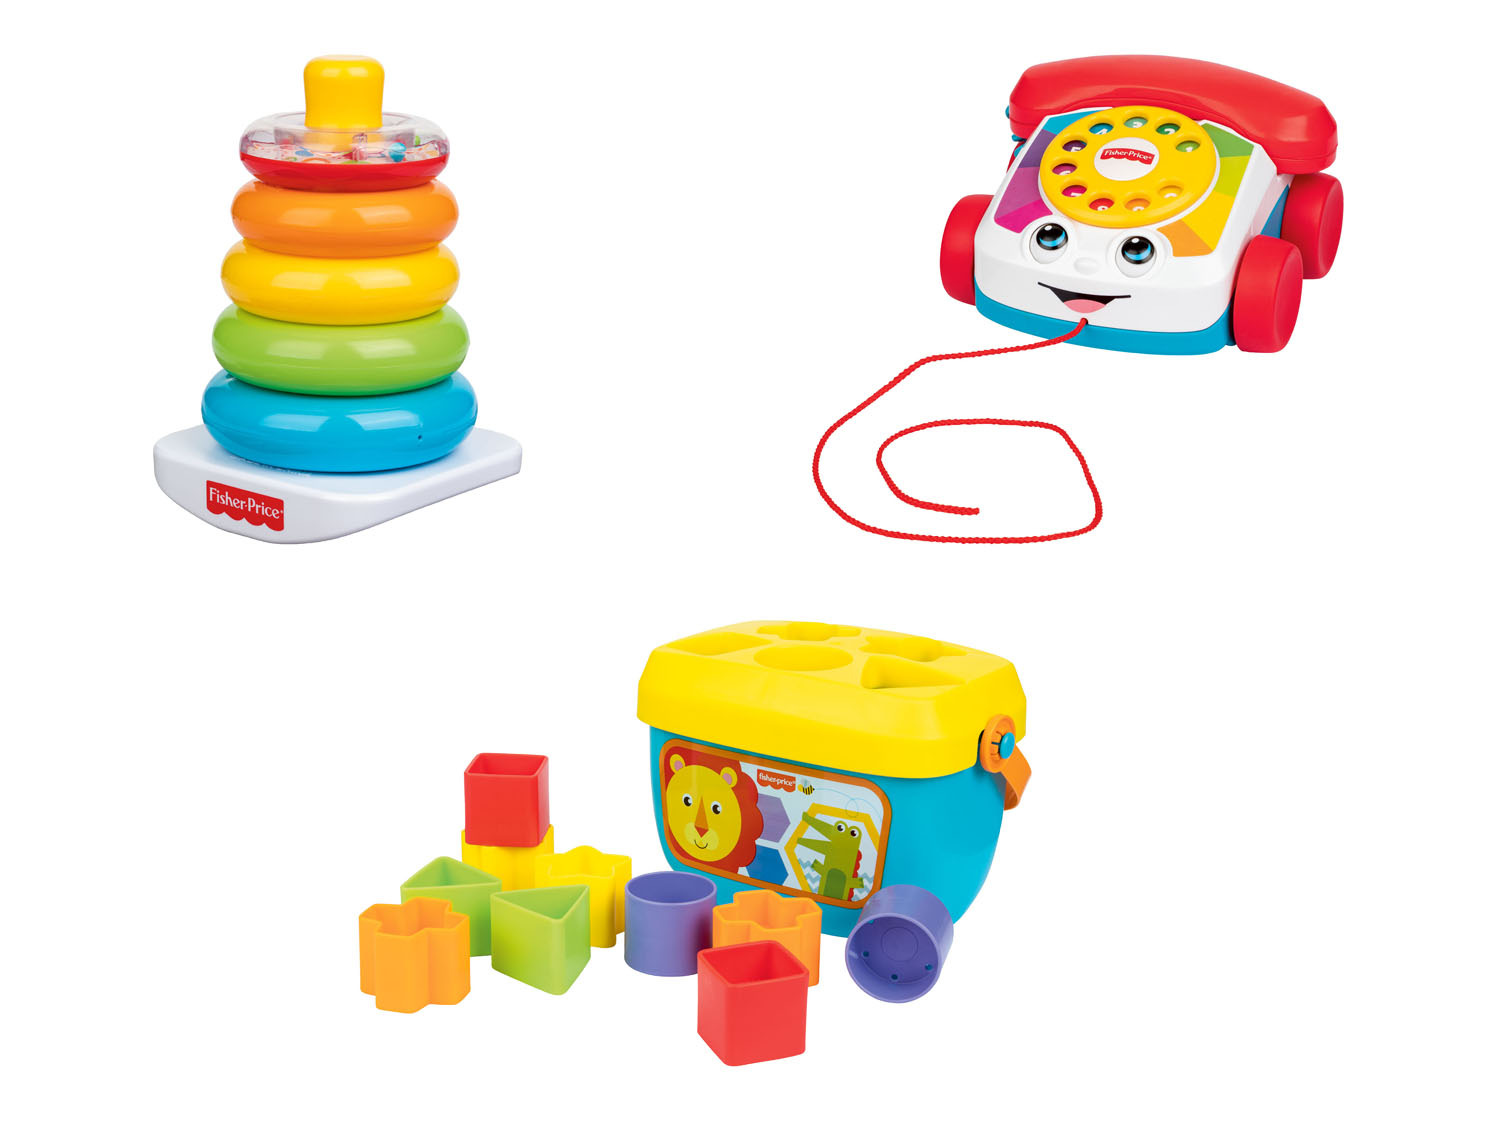 Rose kleur Snazzy Hesje Fisher-Price Babyspeelgoed online kopen op Lidl.be